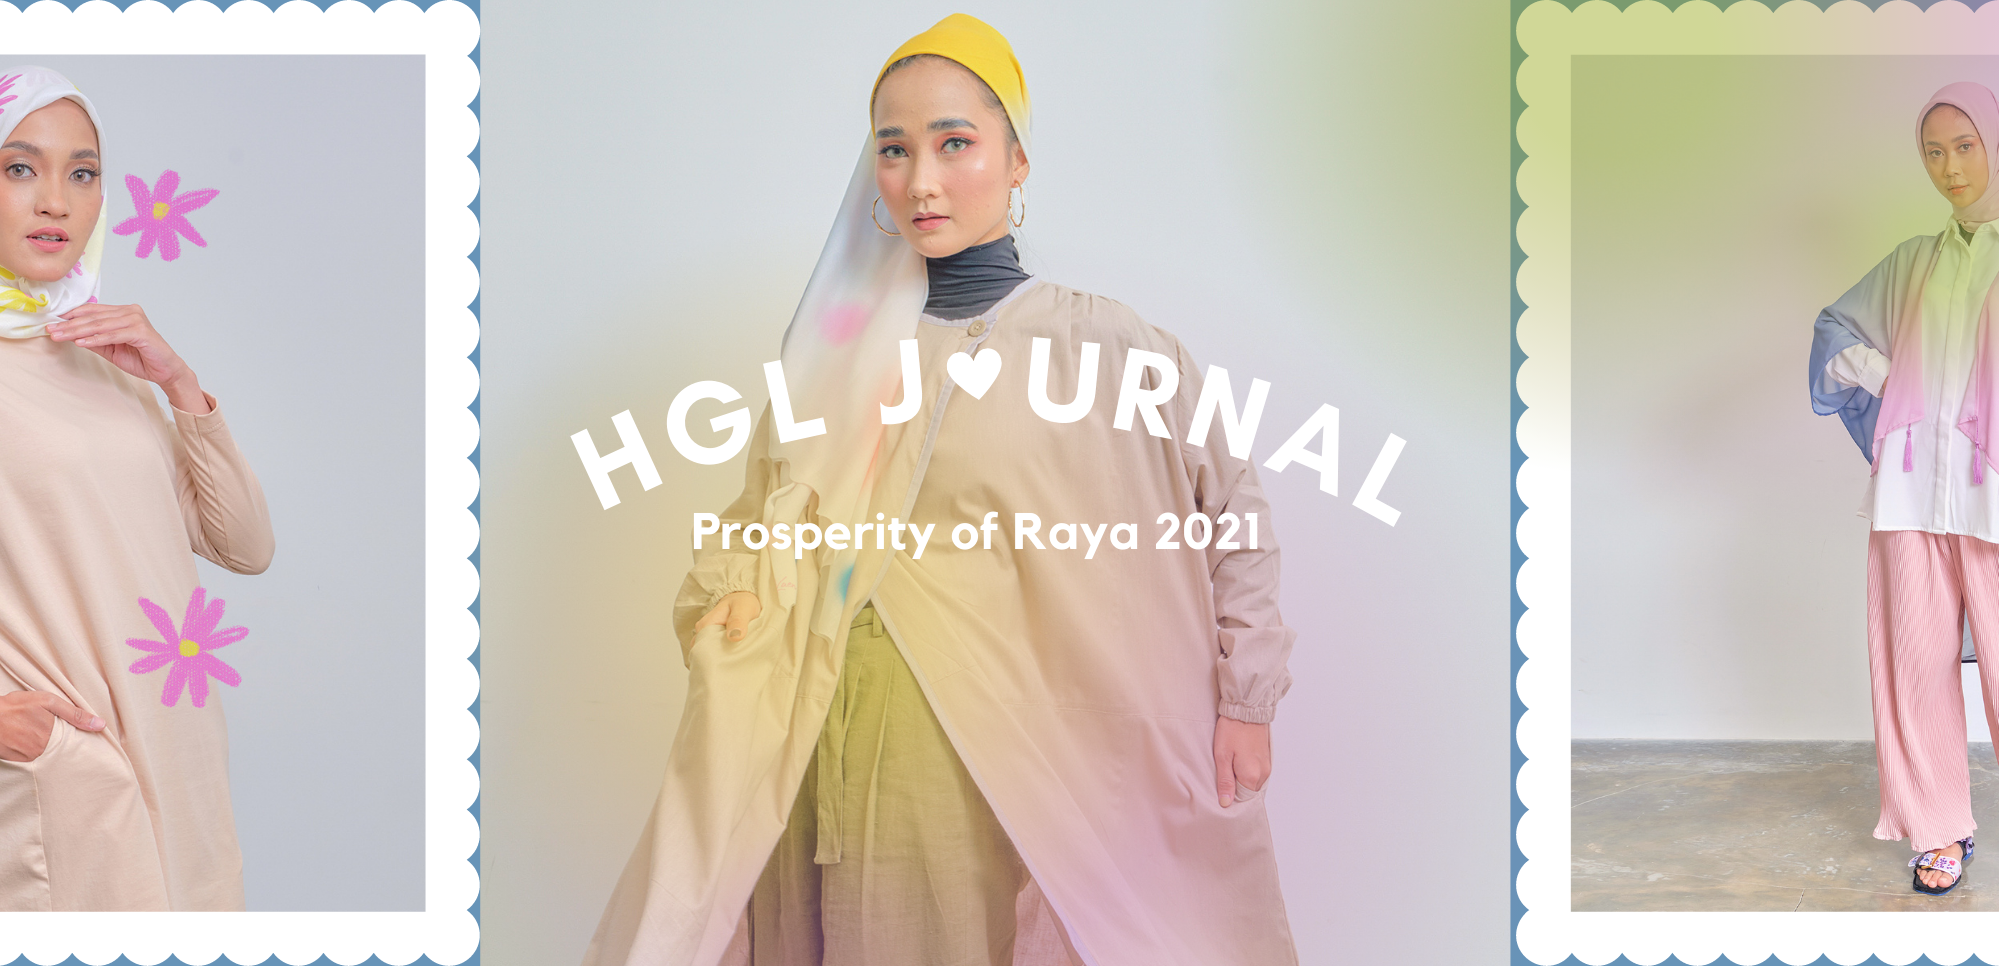 HGL JOURNAL: PROSPERITY OF RAYA 2021